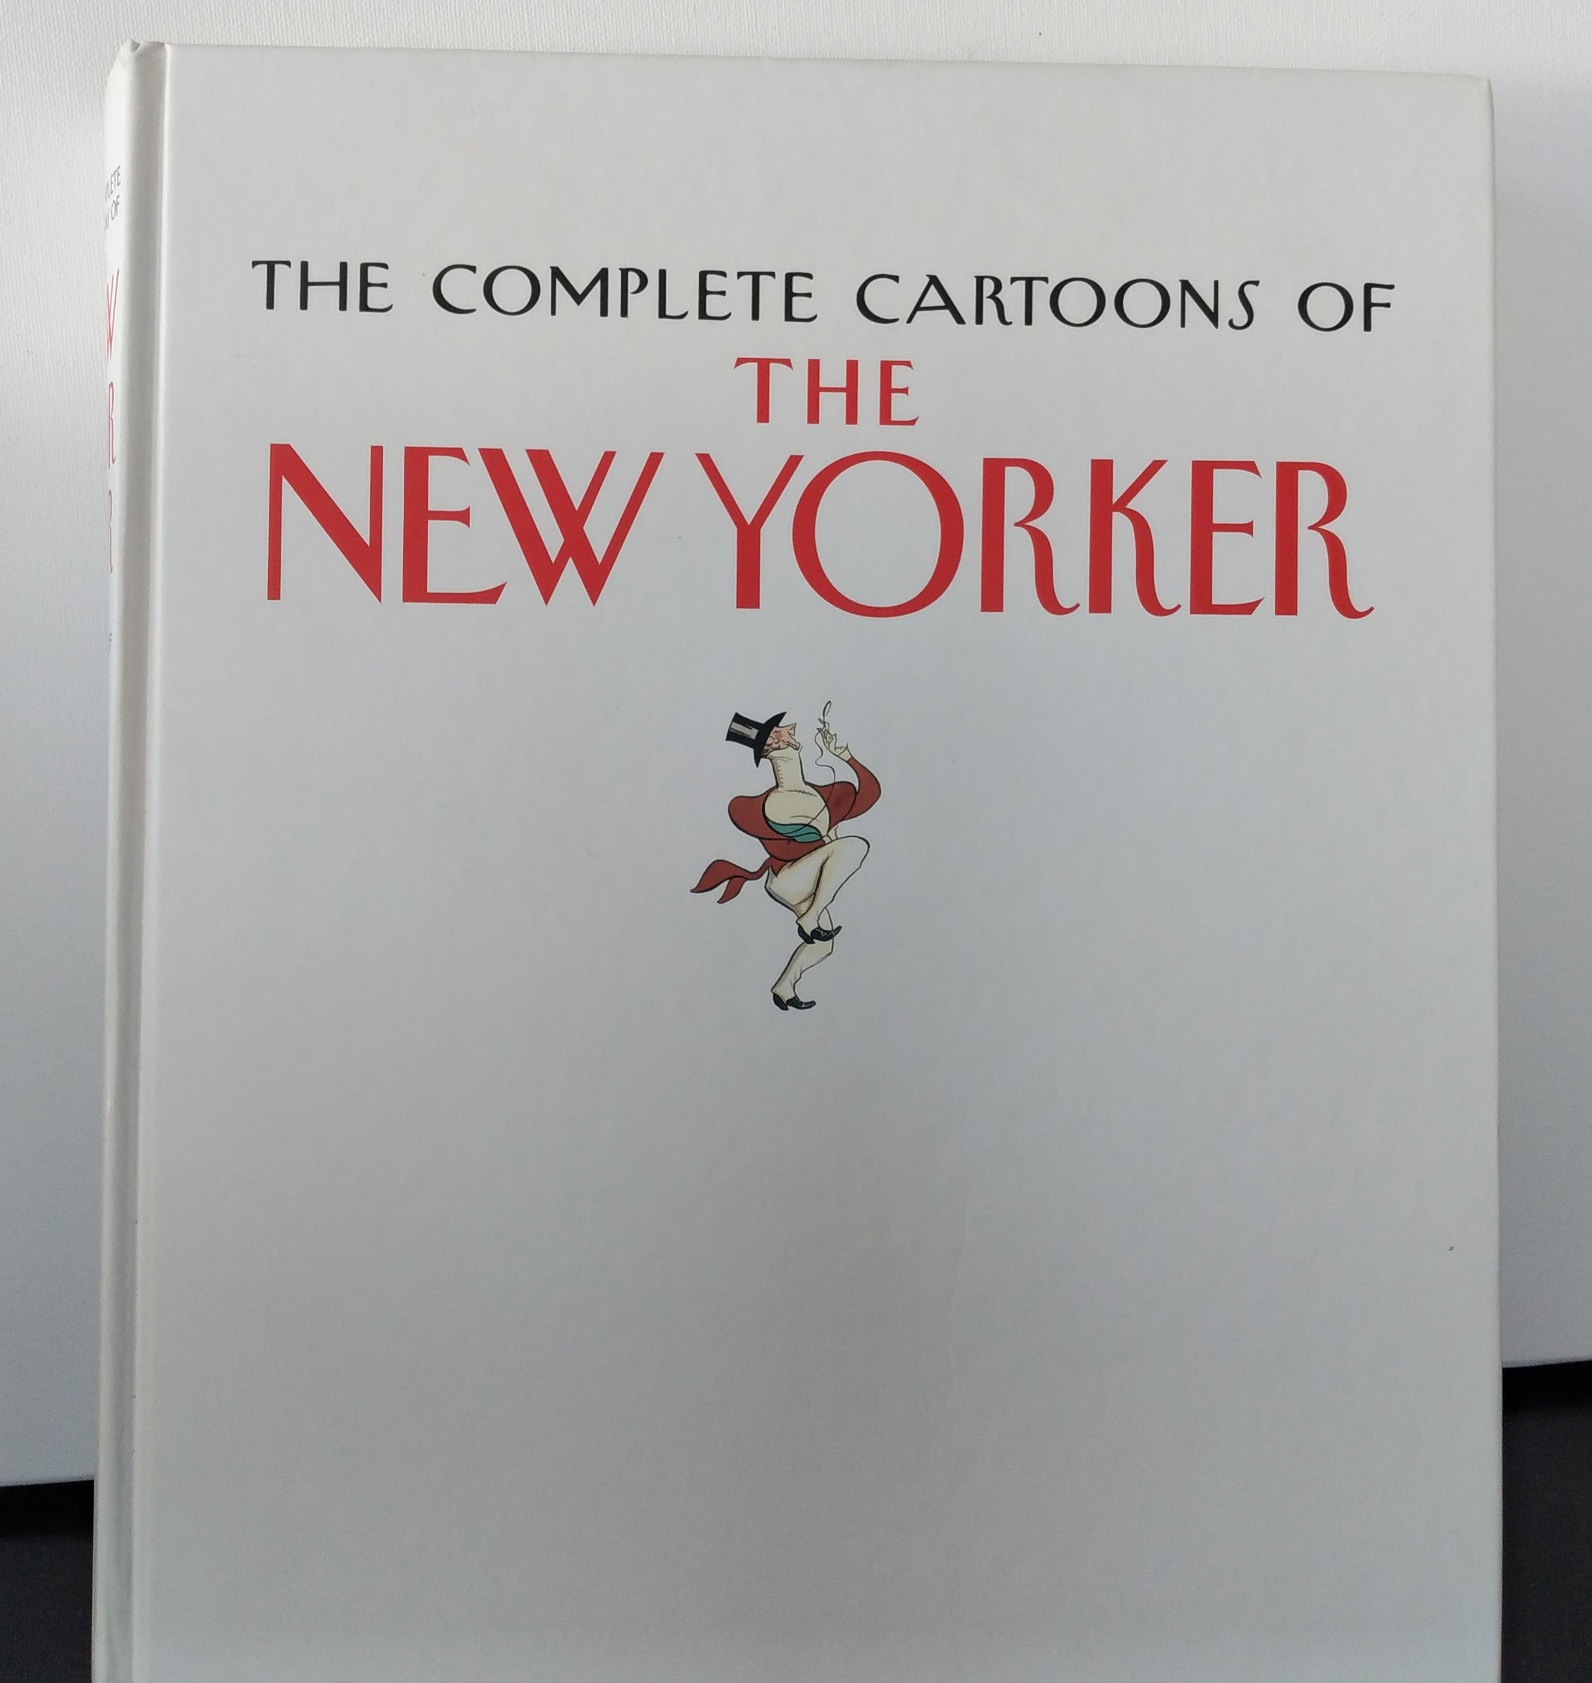 The New Yorker - Cartoons